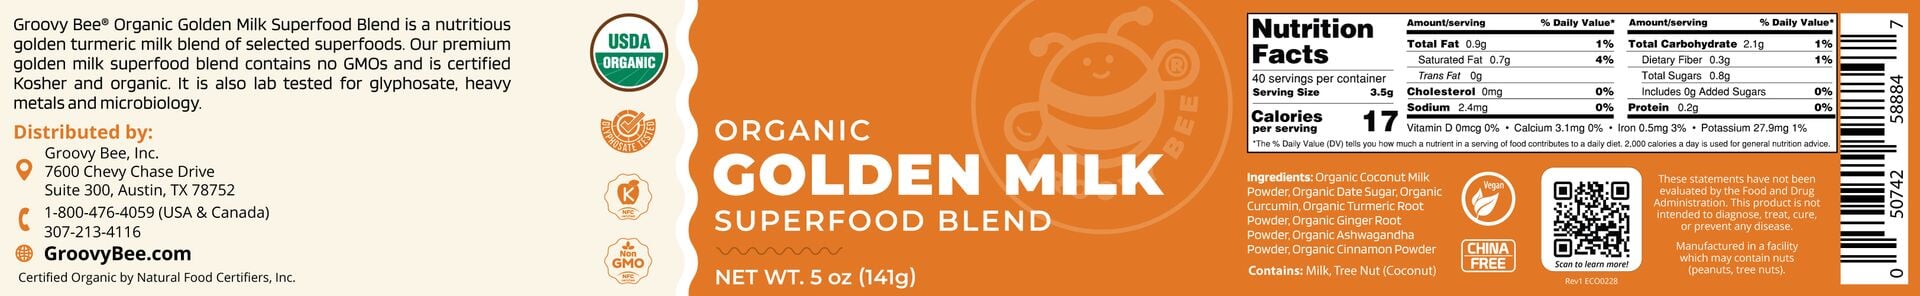 Organic Golden Milk Superfood Blend 5 oz (141 g) Superfoods Brighteon Store 